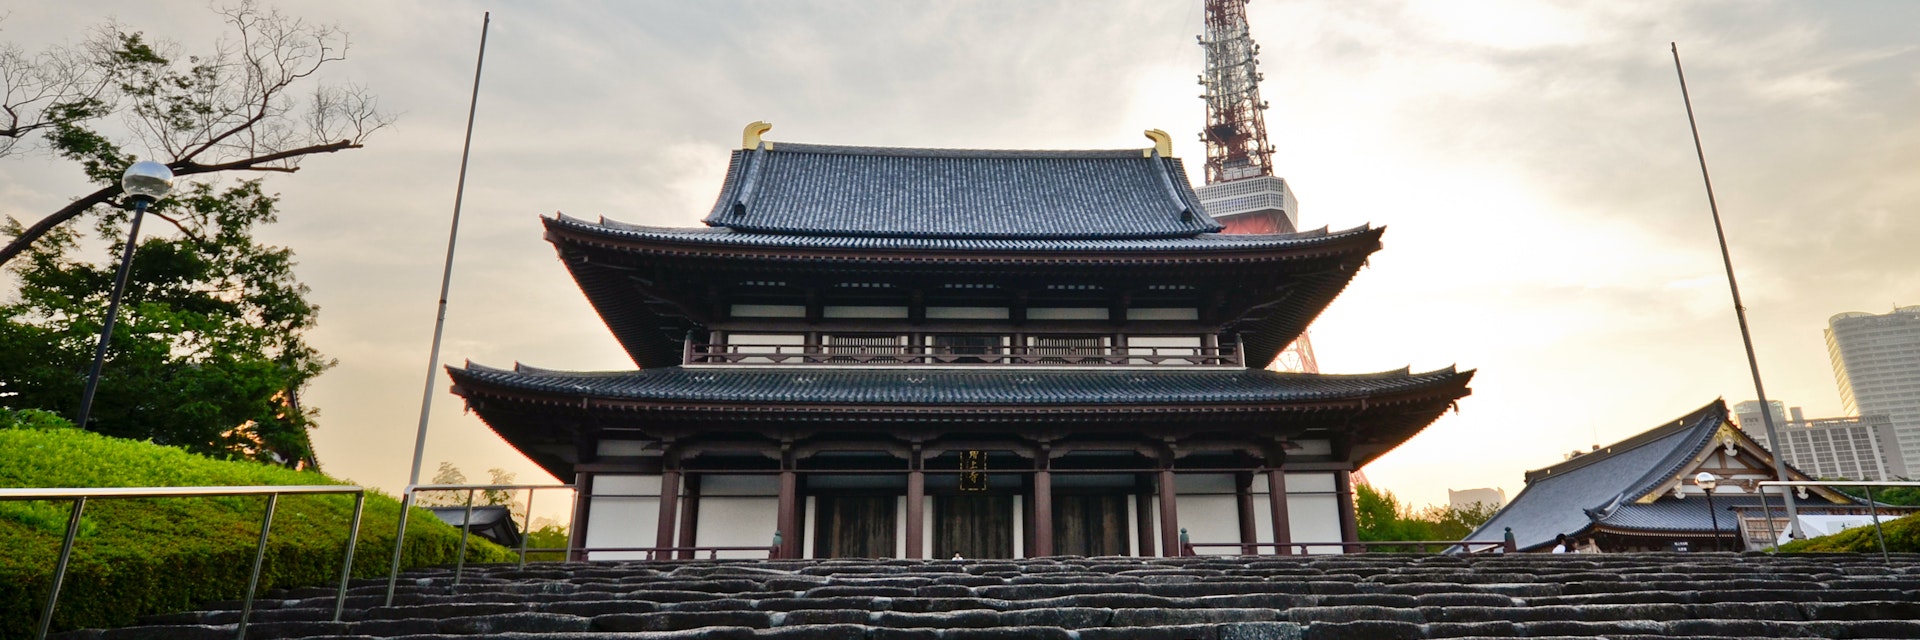 The shine of the Zōjō-ji Buddhist temple in Minato in the early evening.